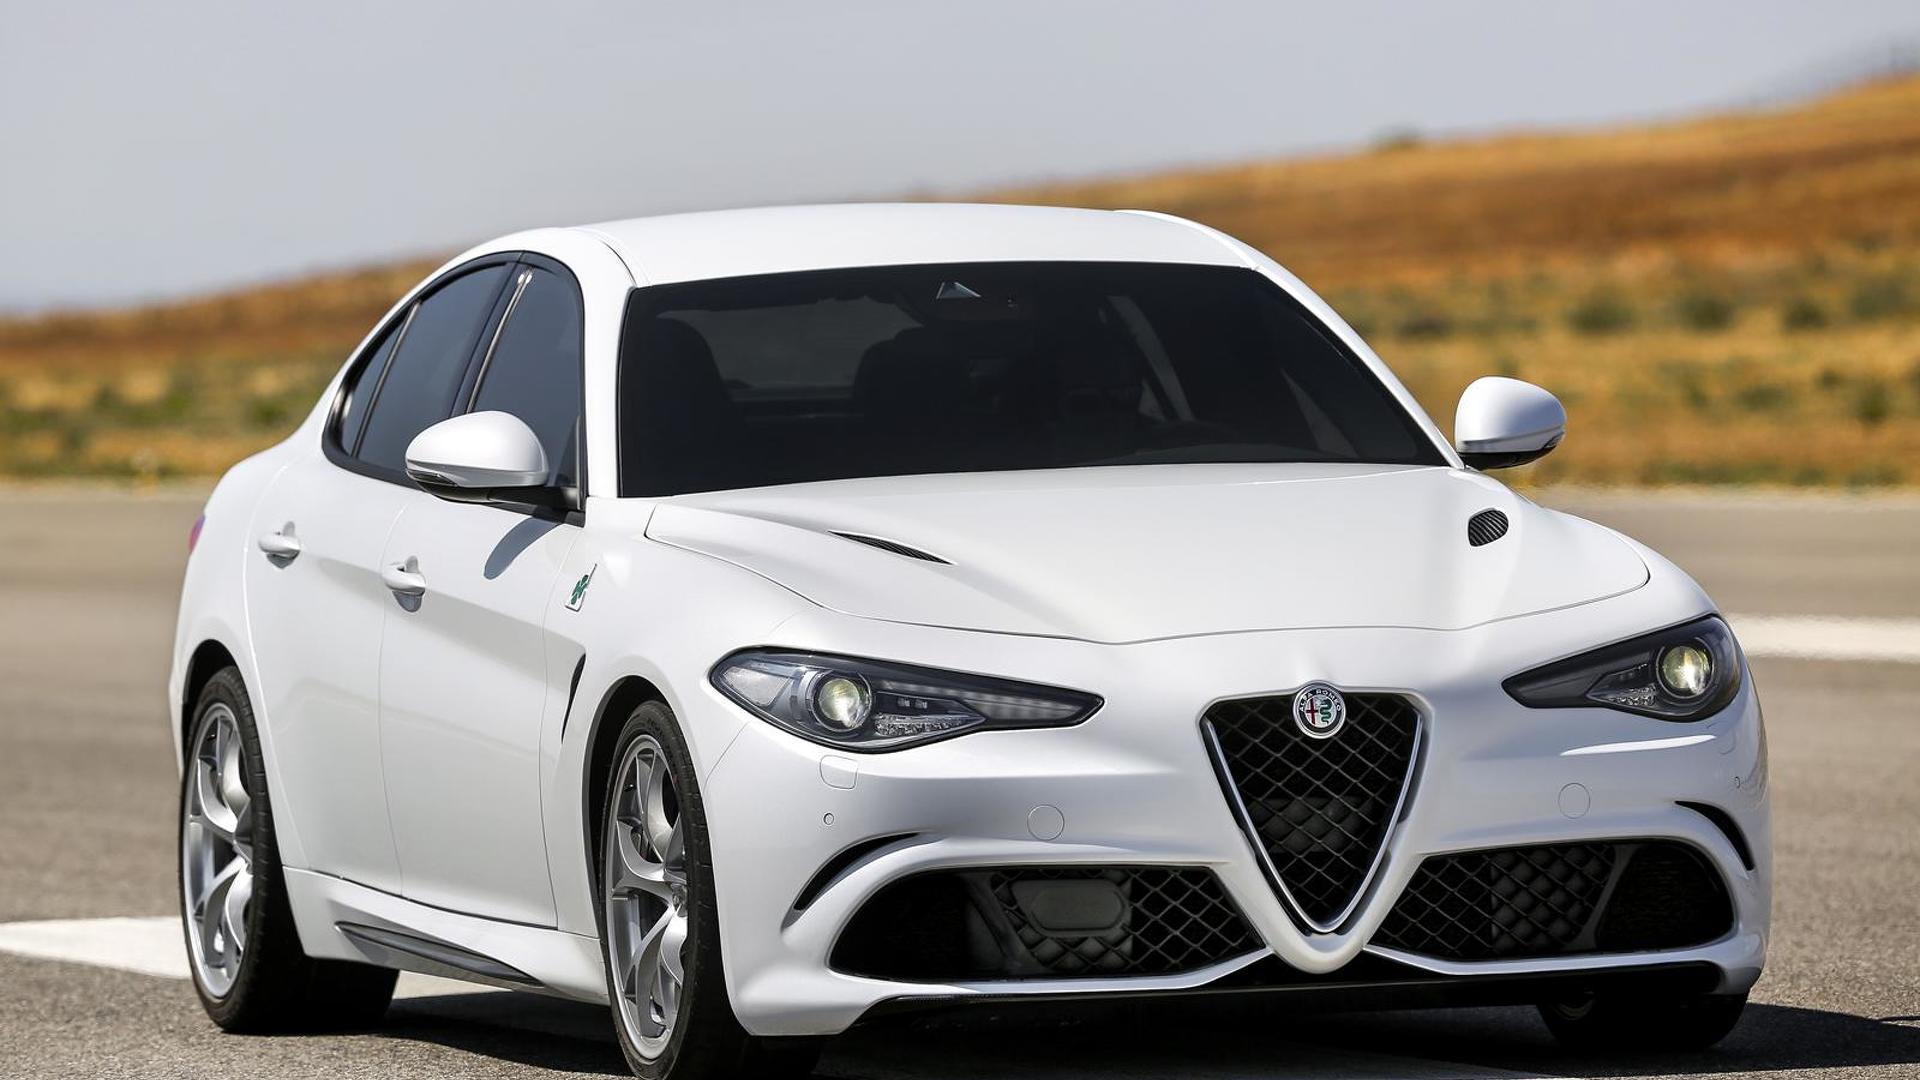 Alfa Romeo says Giulia design was inspired